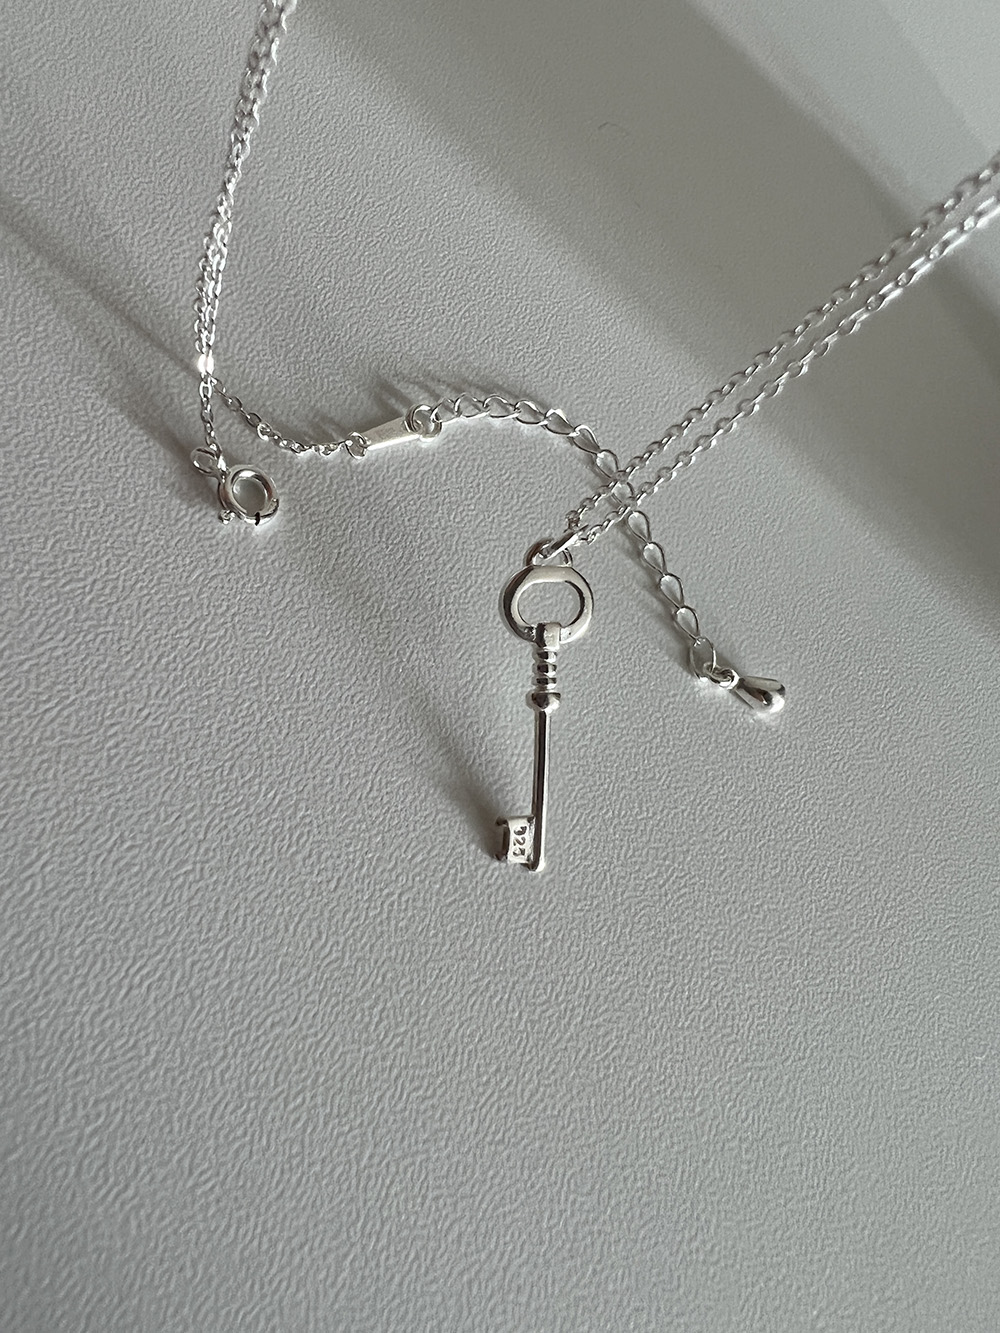 [92.5 silver] antique key necklace